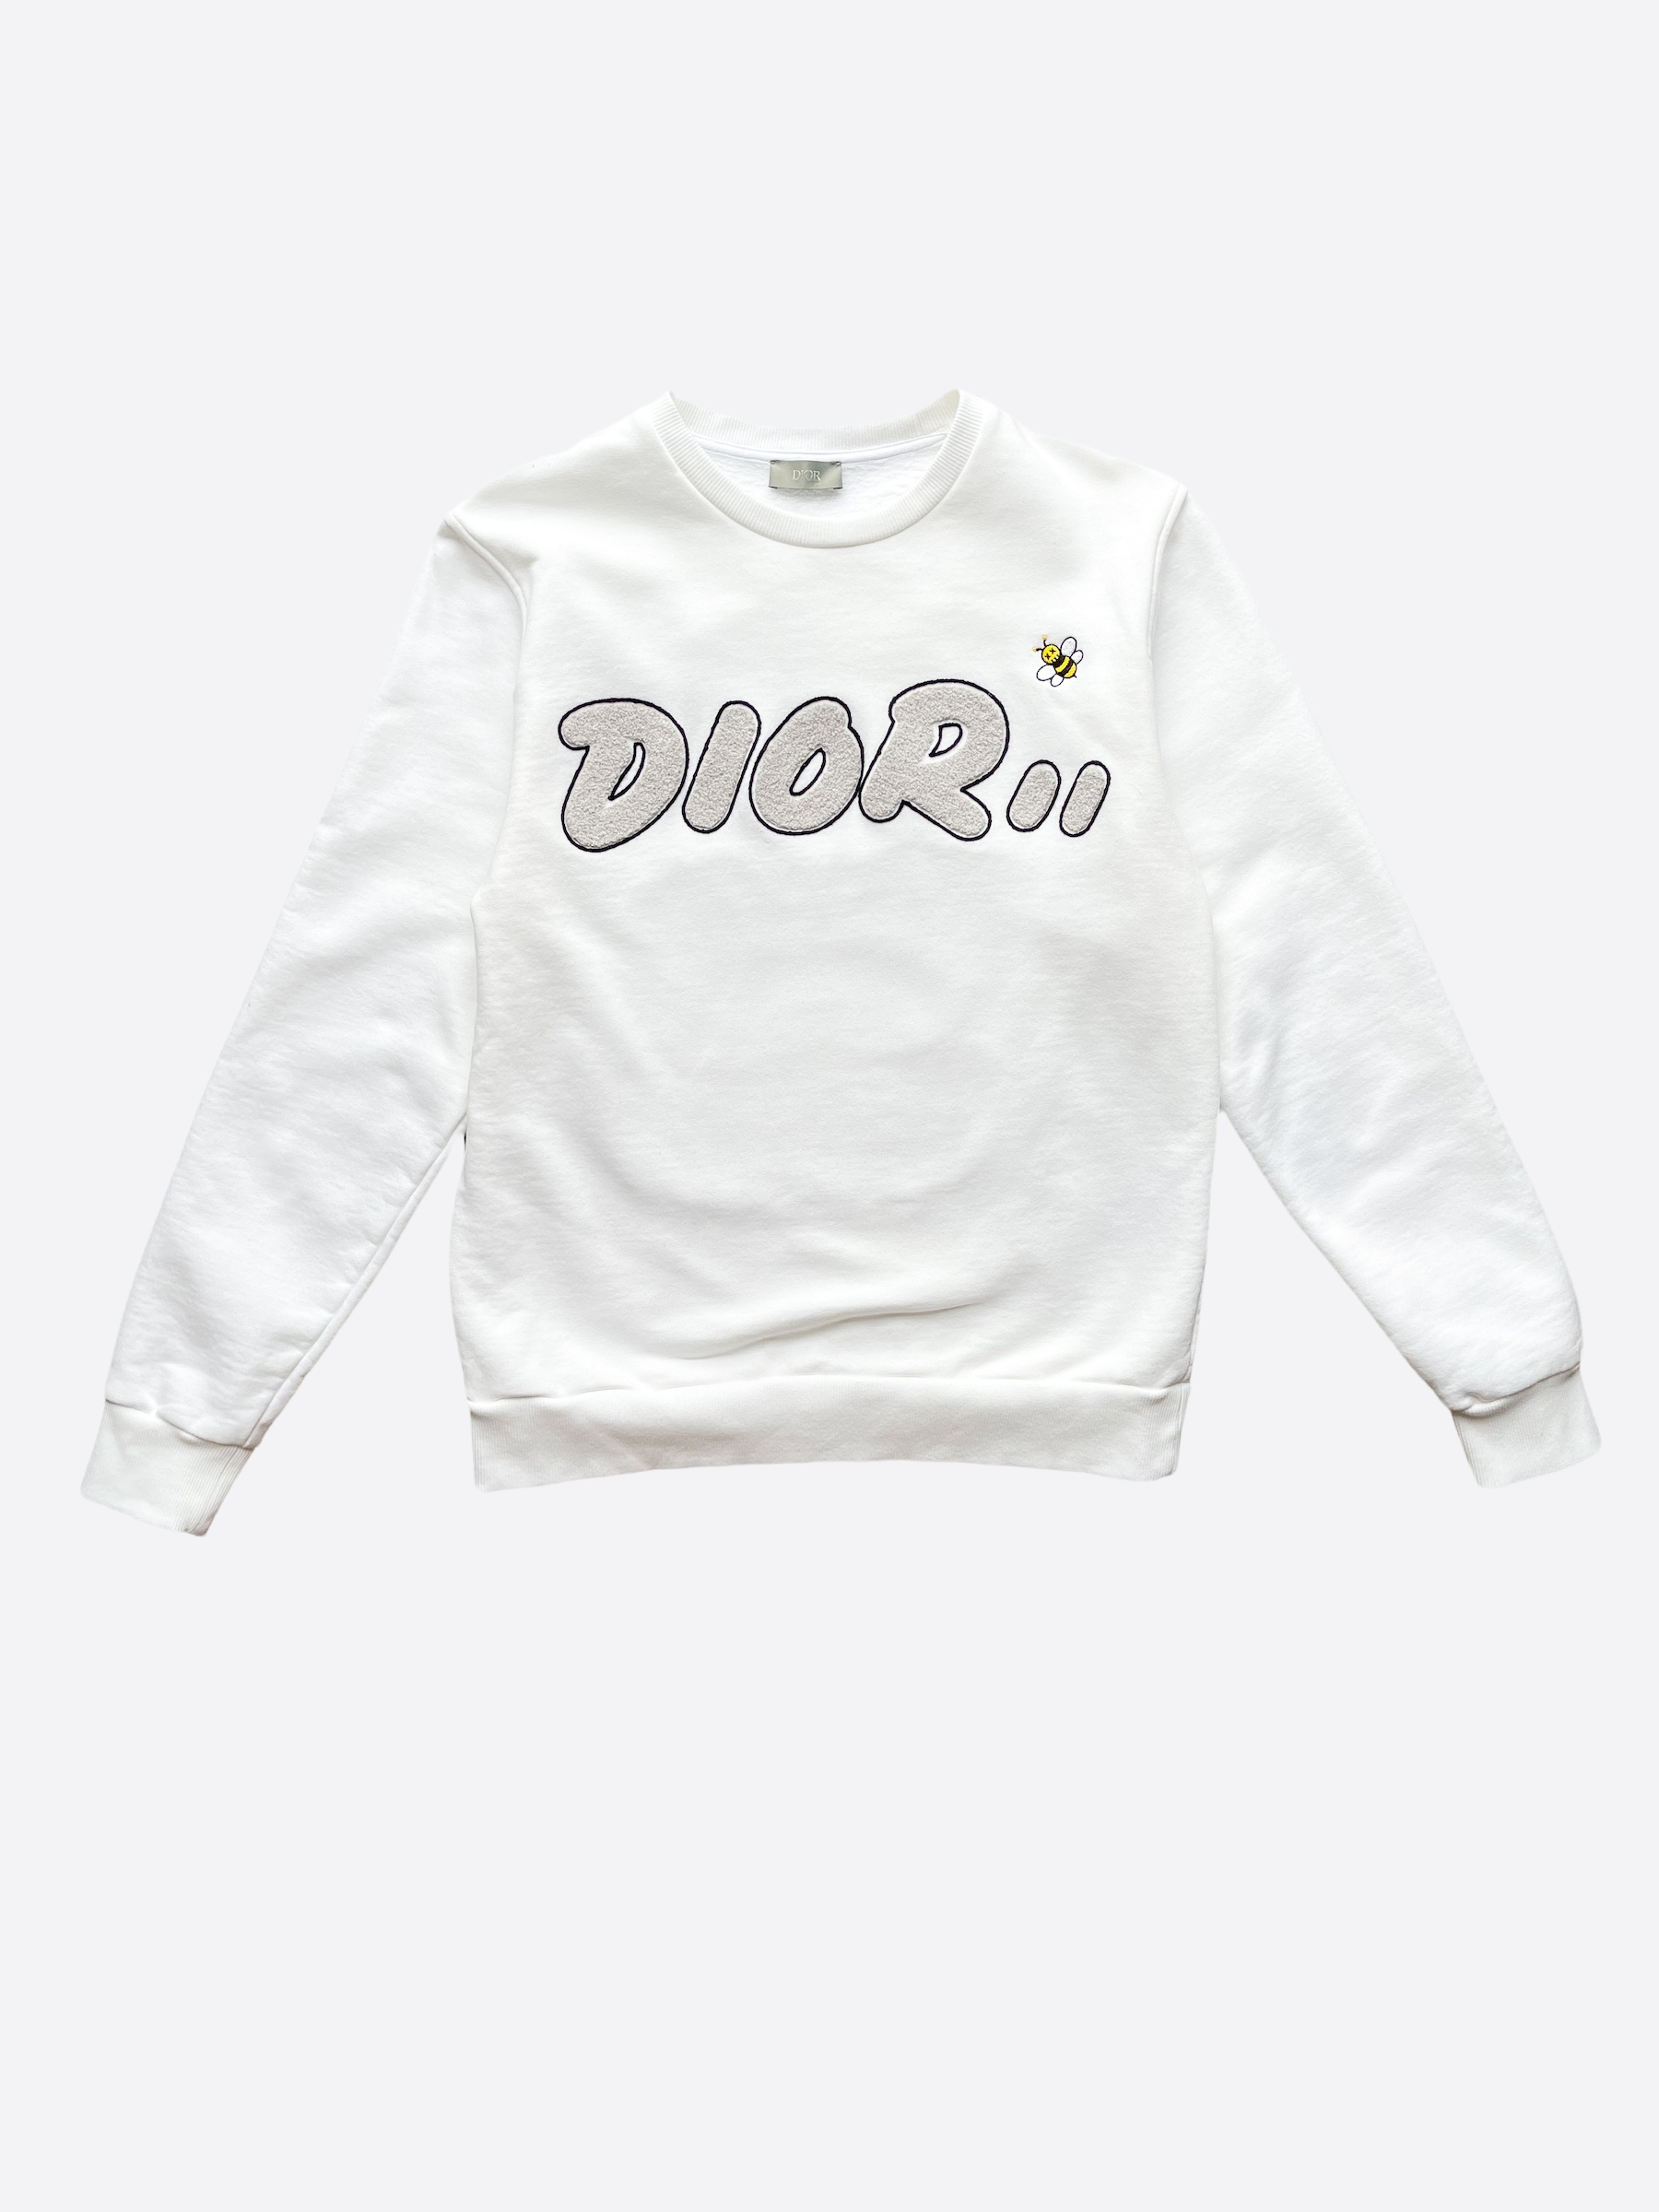 dior kaws sweatshirt